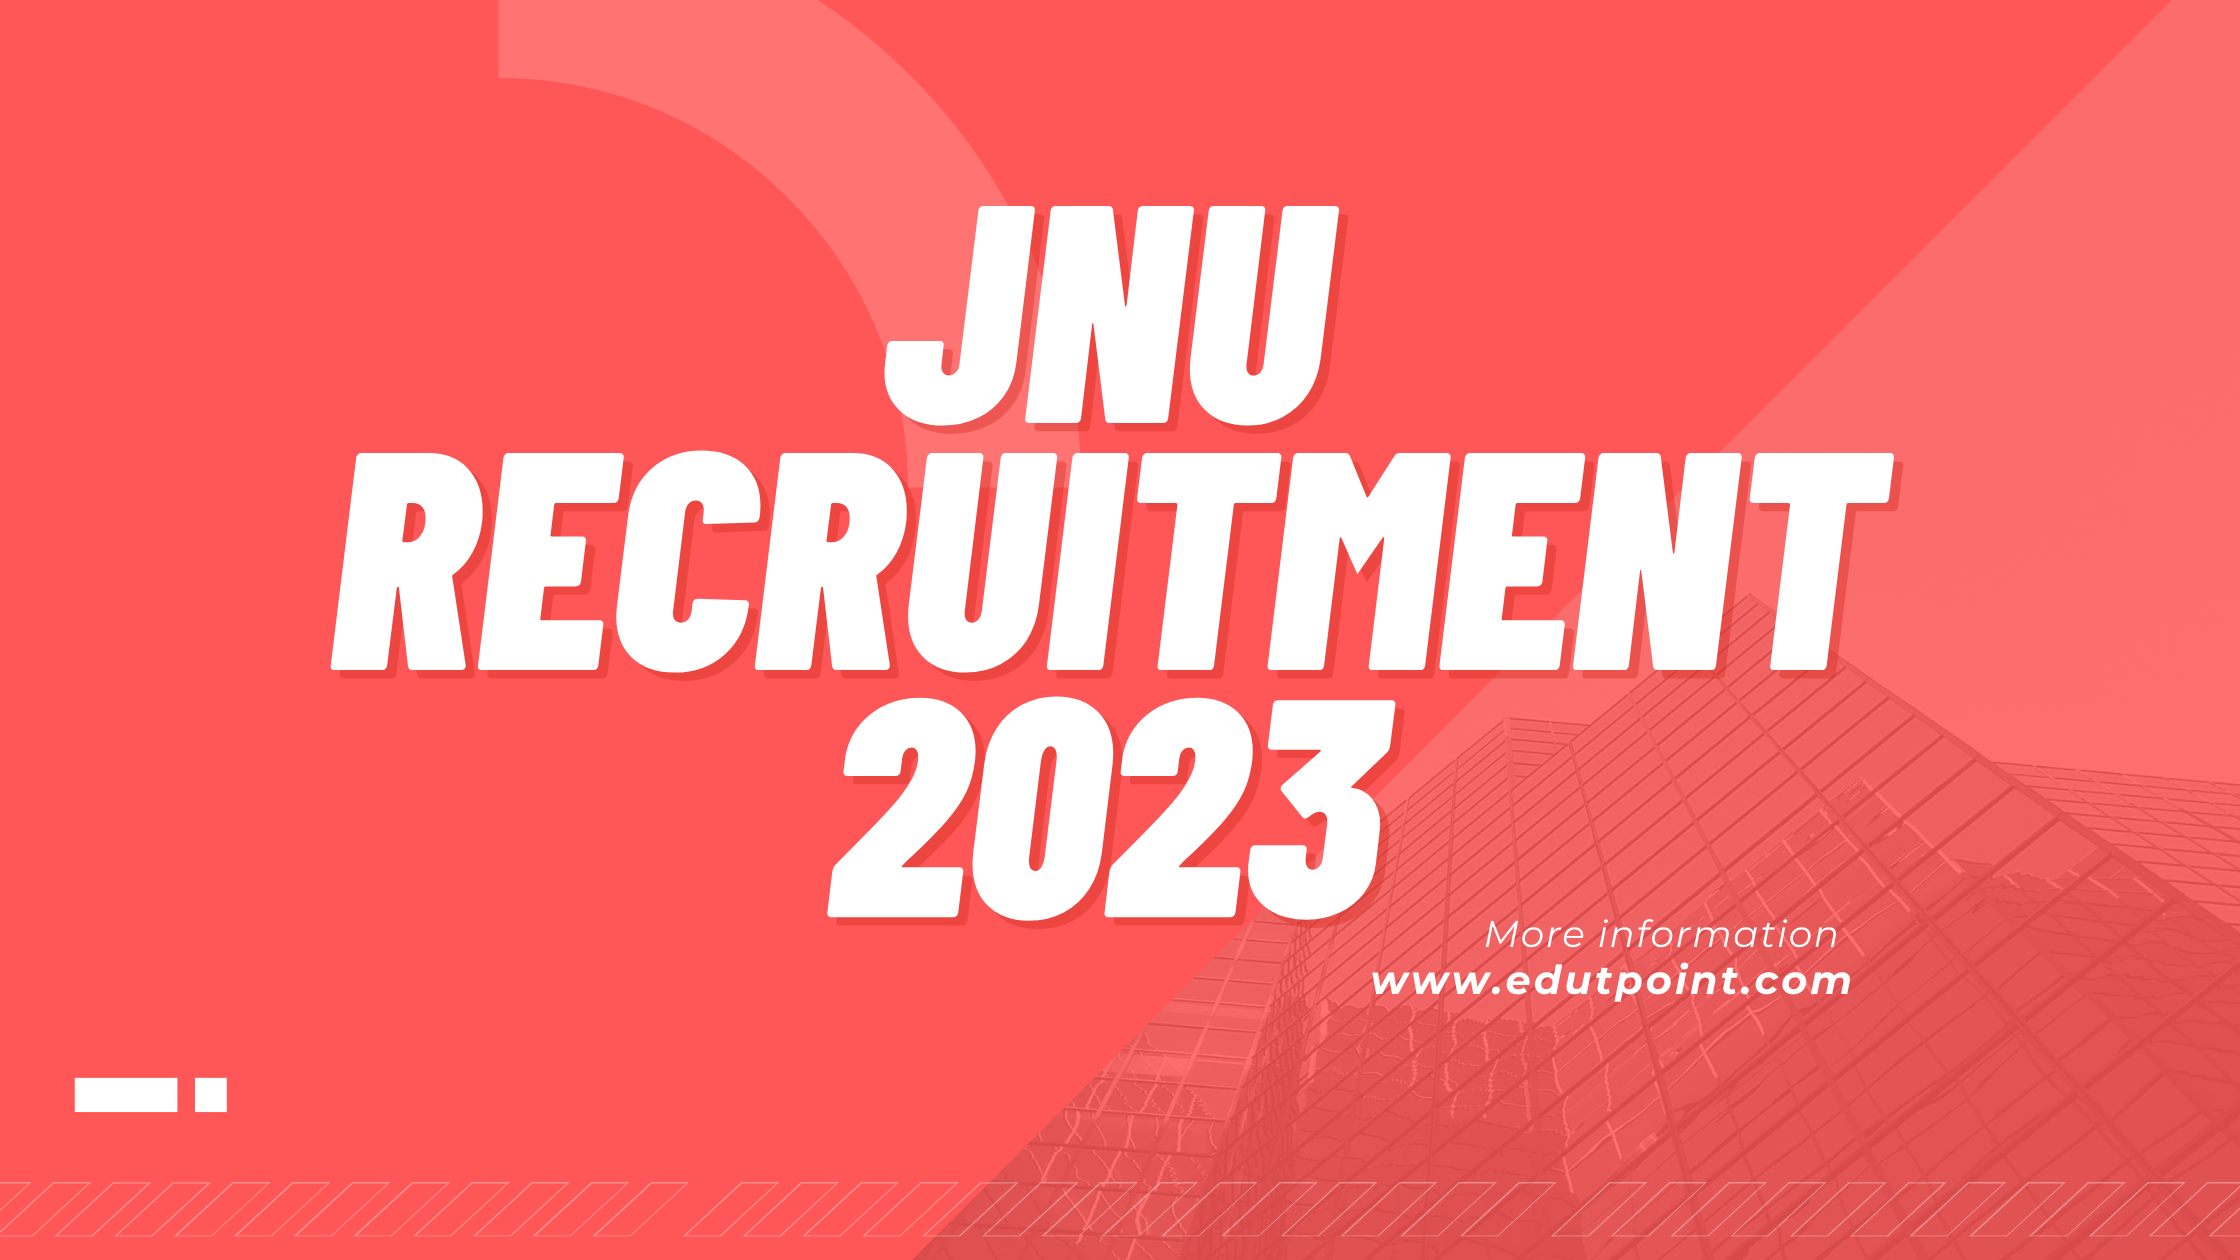 JNU Recruitment 2023 | जवाहरलाल नेहरू विश्वविद्यालय में निकली सीधी भर्ती